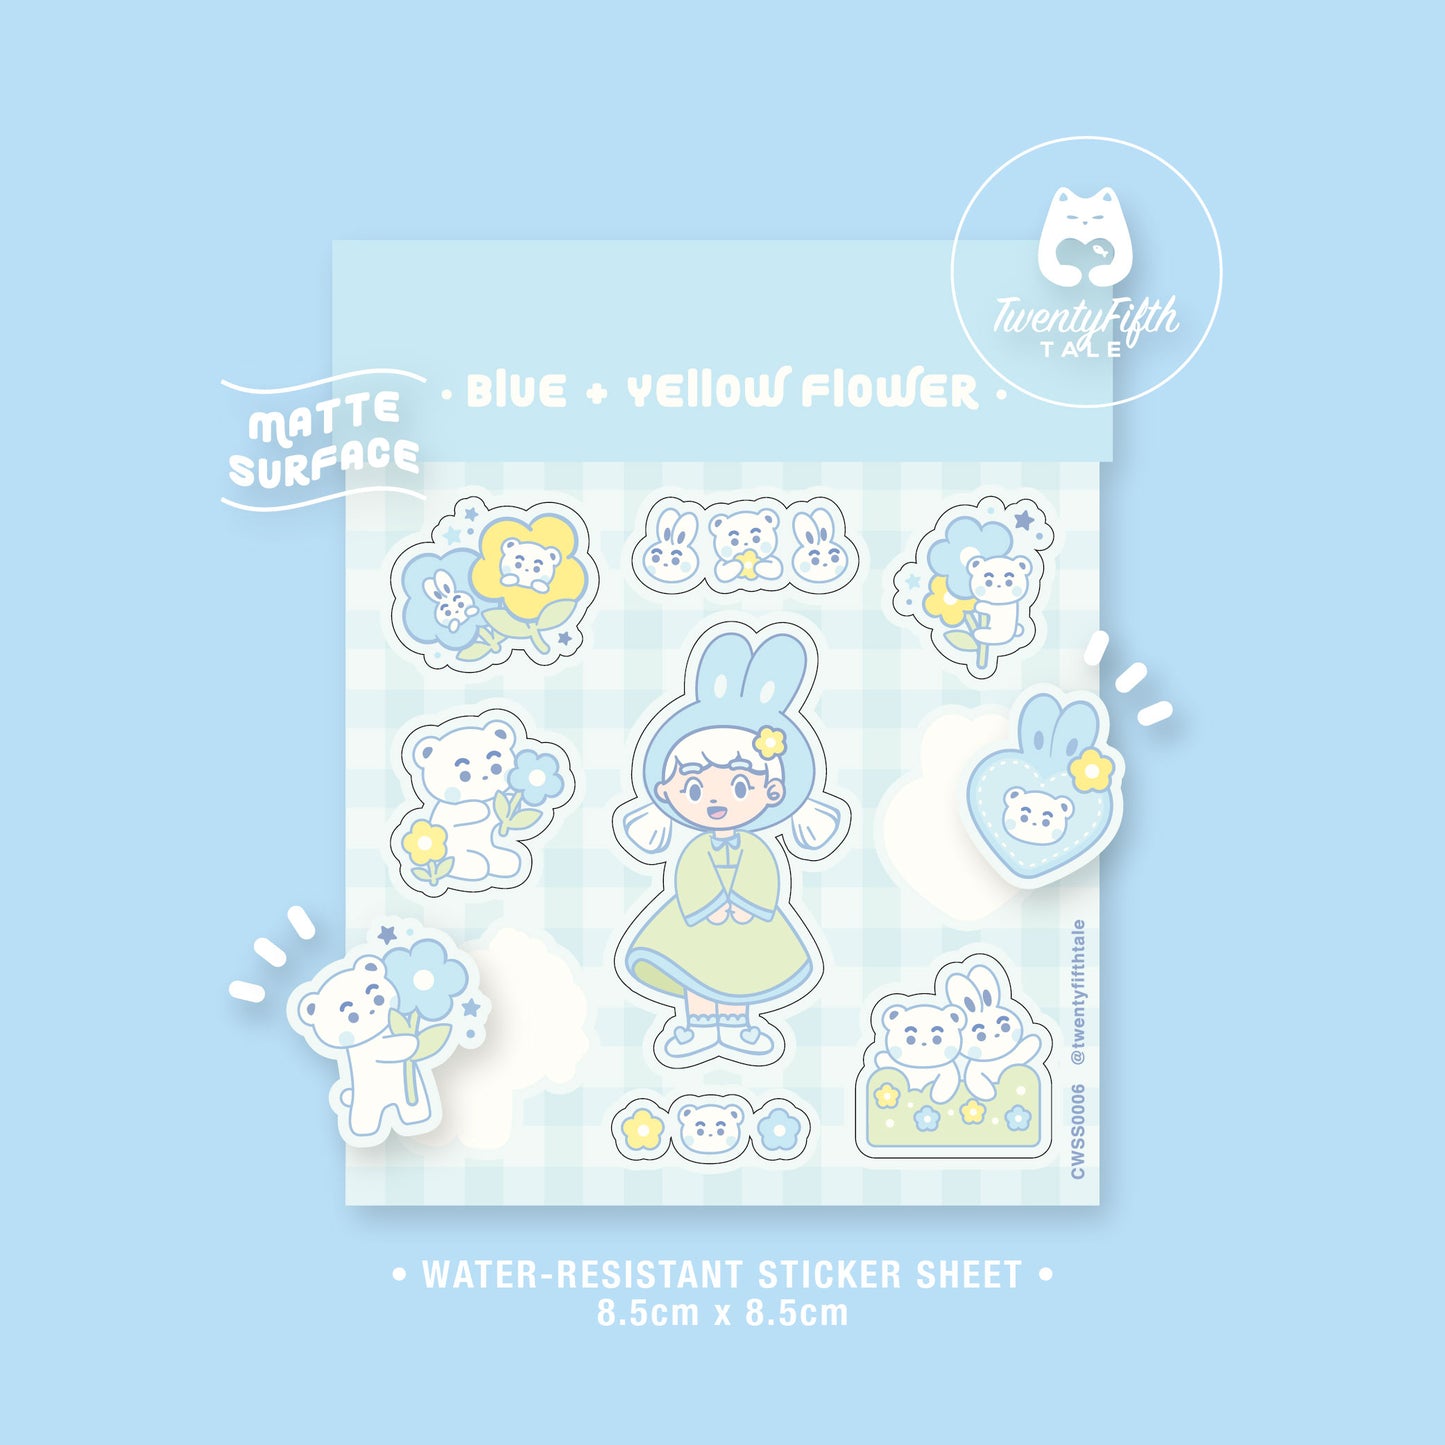 Chibi Wonderland Sticker Sheet | Blue & Yellow Flower